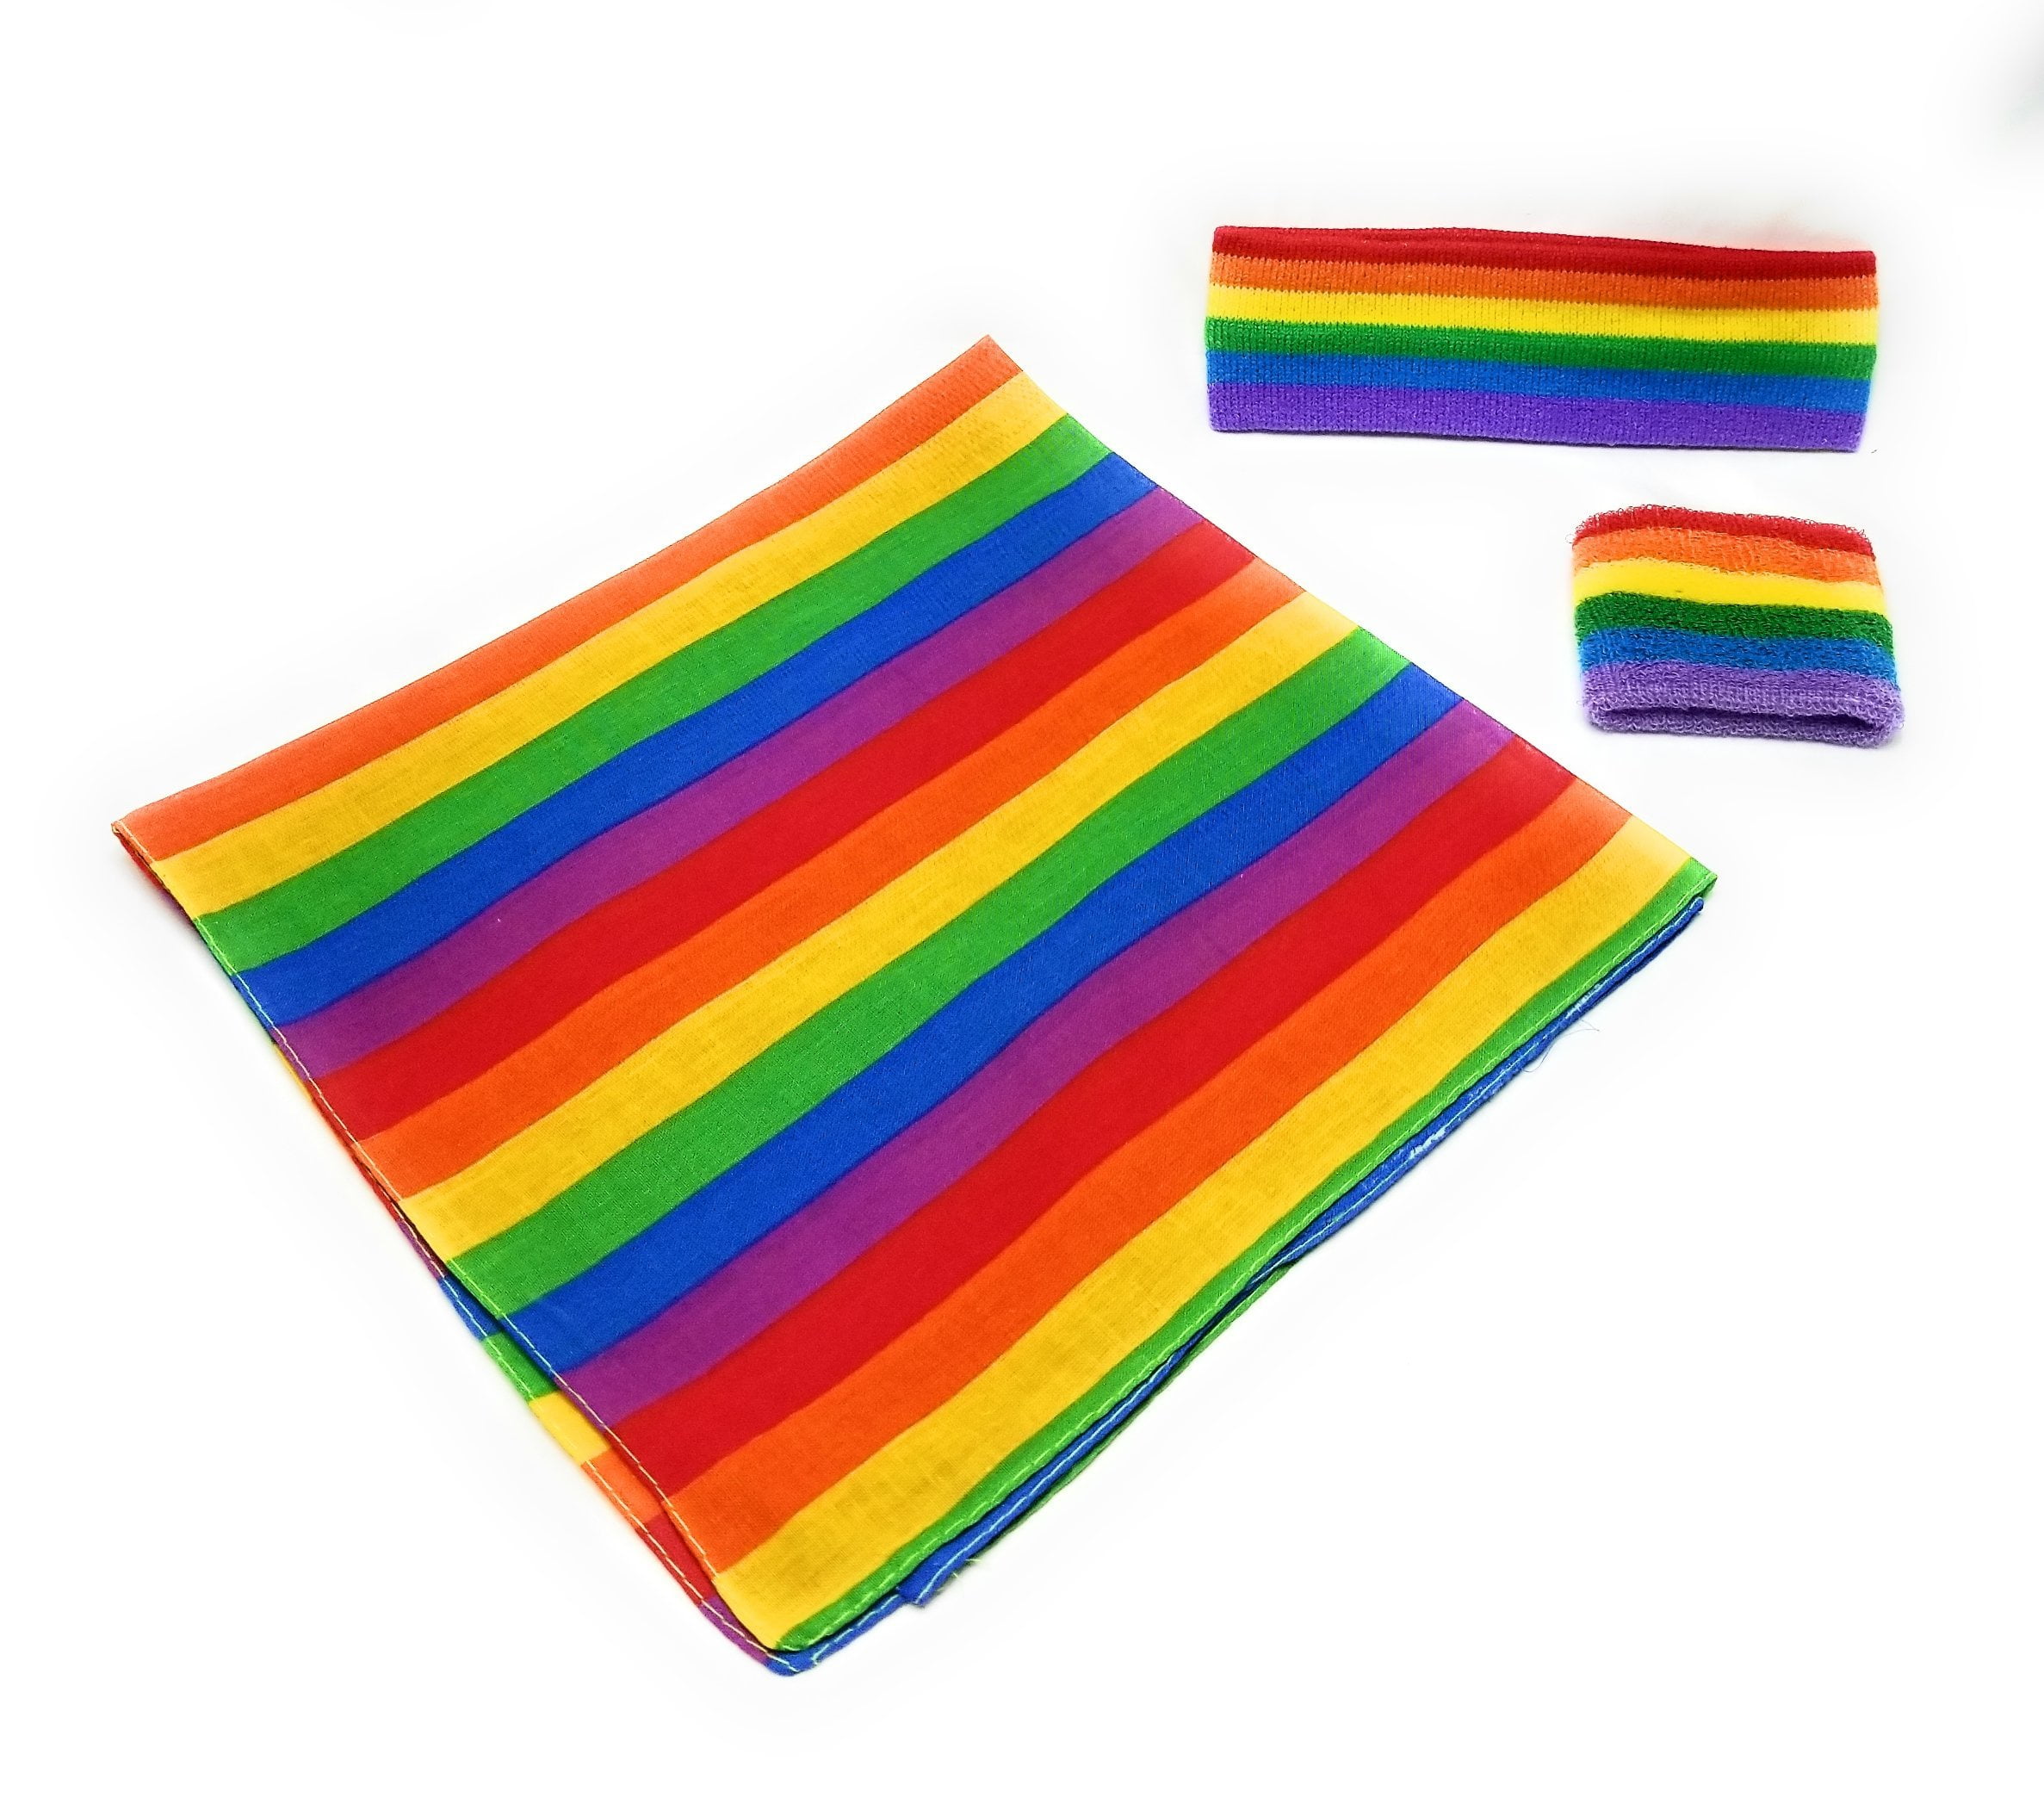 GuDez Bandana Rainbow Stripe 6 Pack Kerchief Cotton Cowboy Head Wrap Unisex Colorful Headband Gay Pride Square Scarf Wristband for Festival and Daily Wear